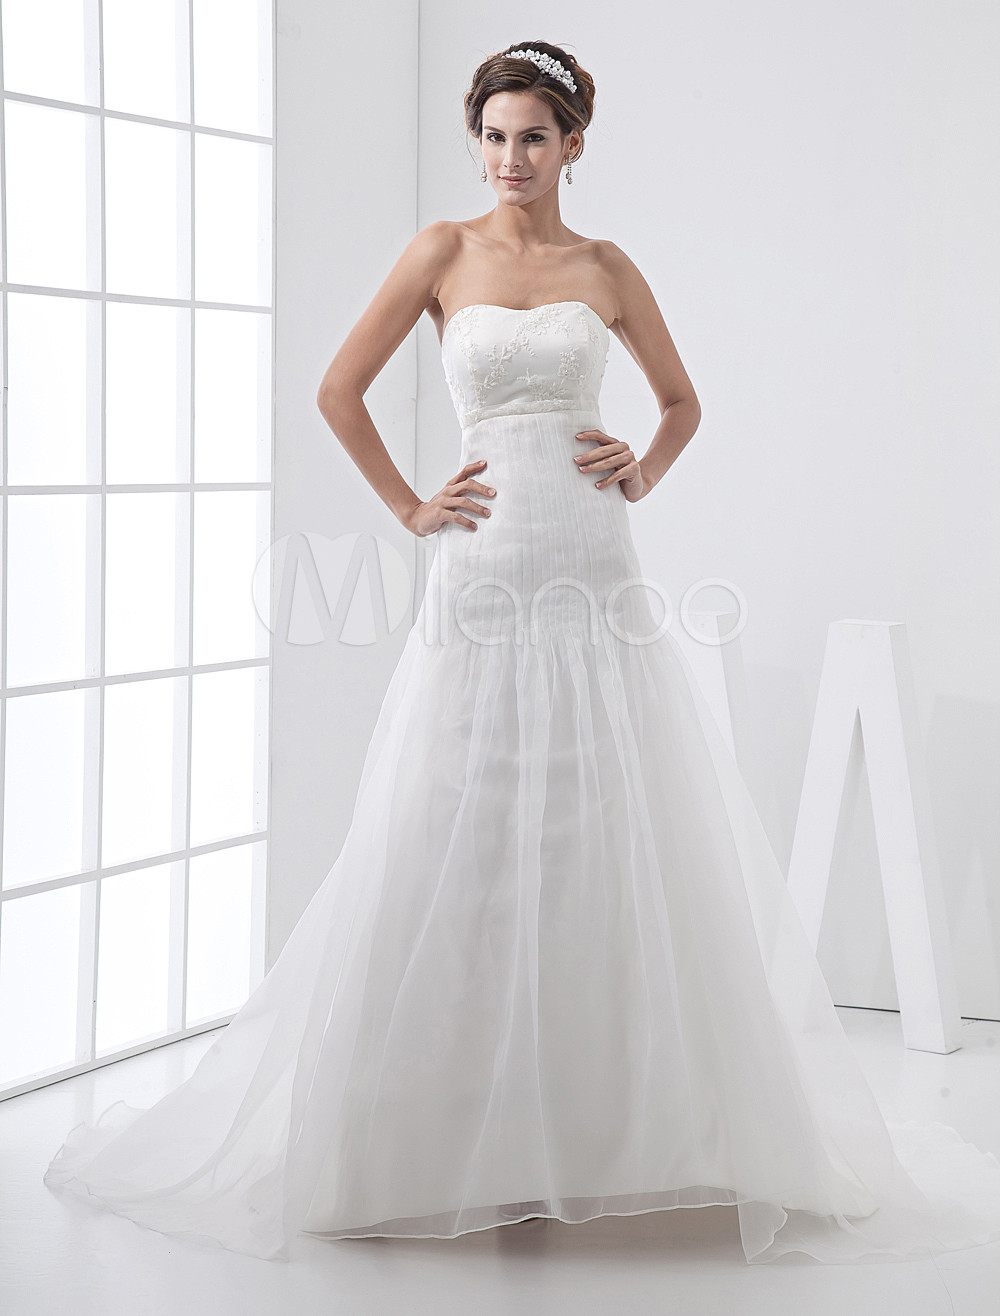 Ivory Tulle Strapless Empire Waist Wedding Dress 6516